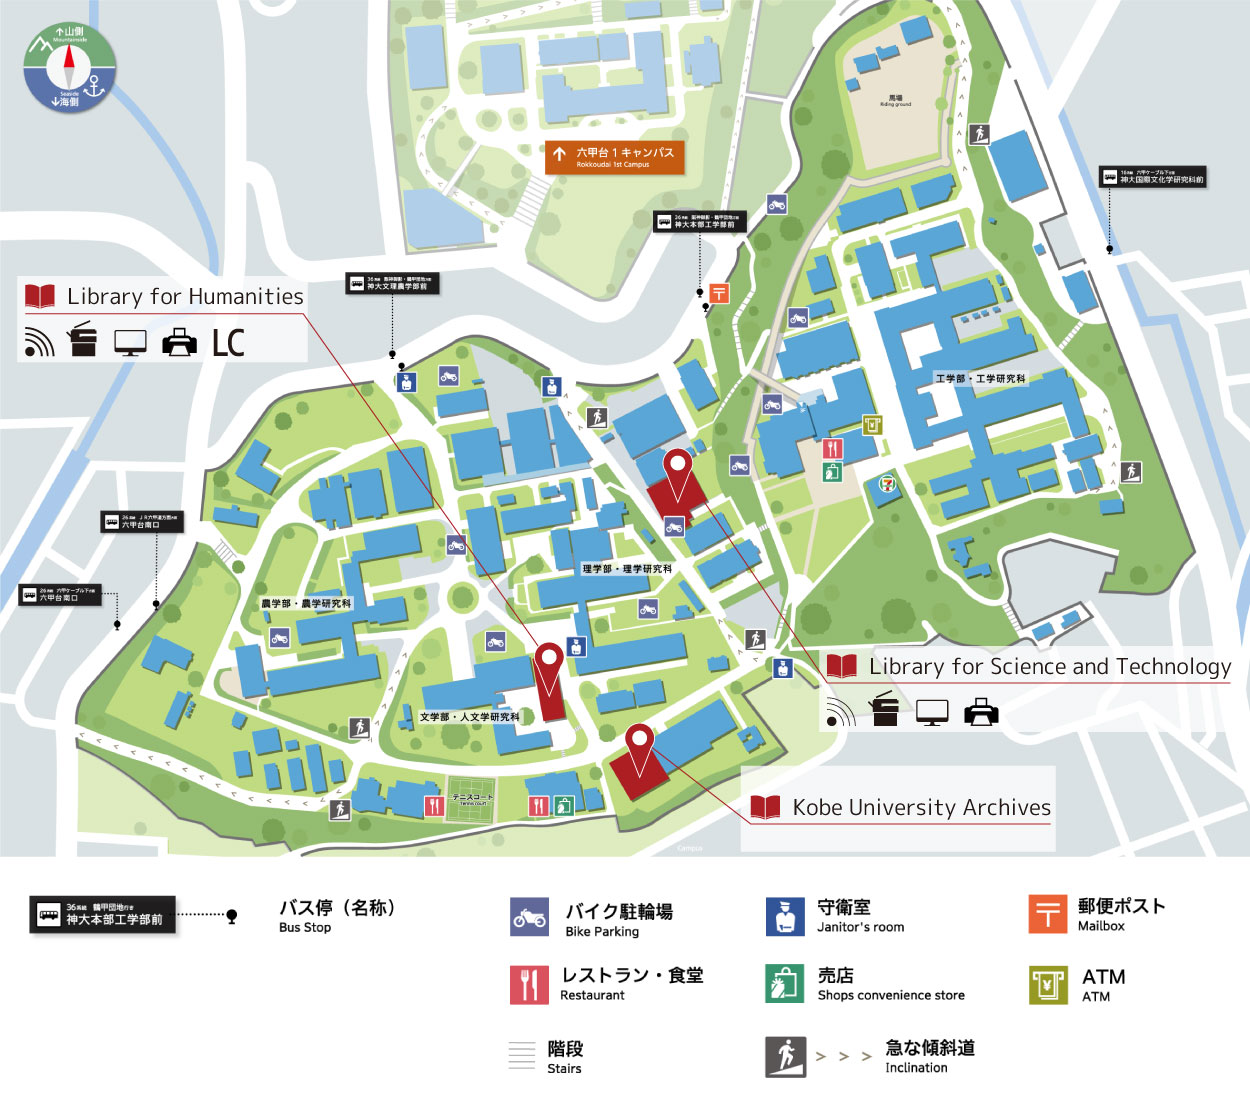 map of rokkodai 2nd campus